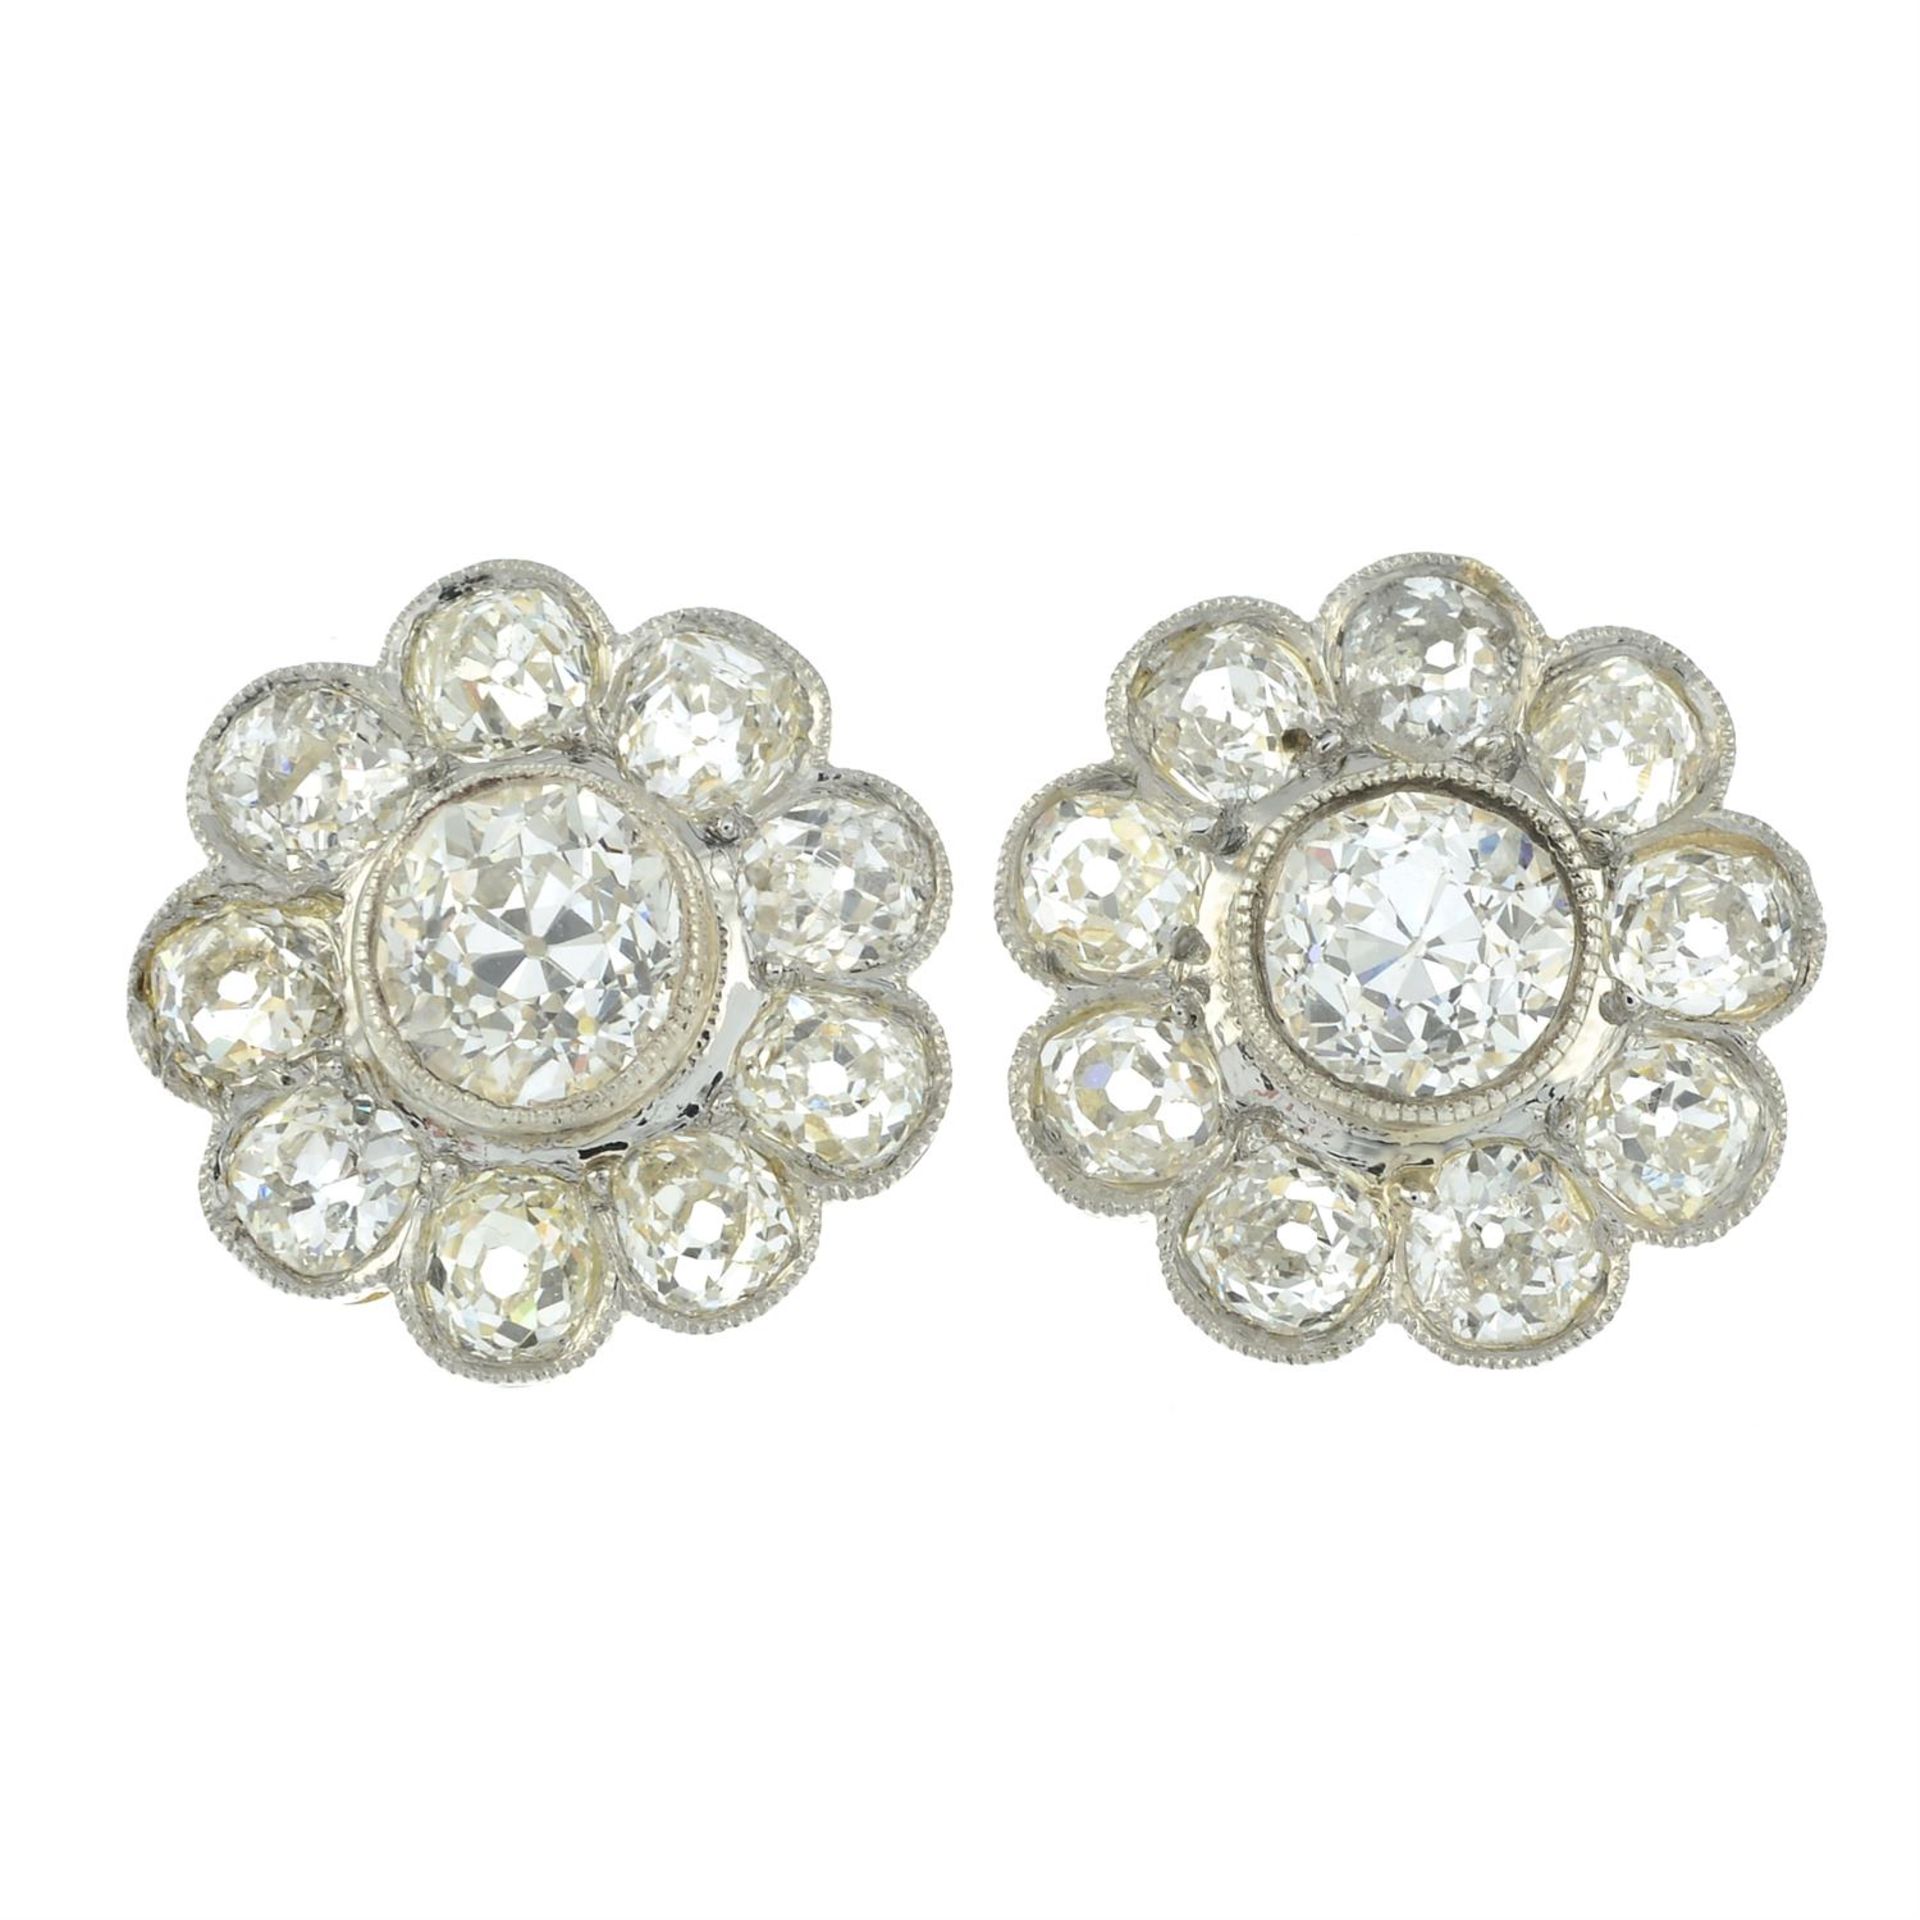 A pair of old-cut diamond cluster earrings.